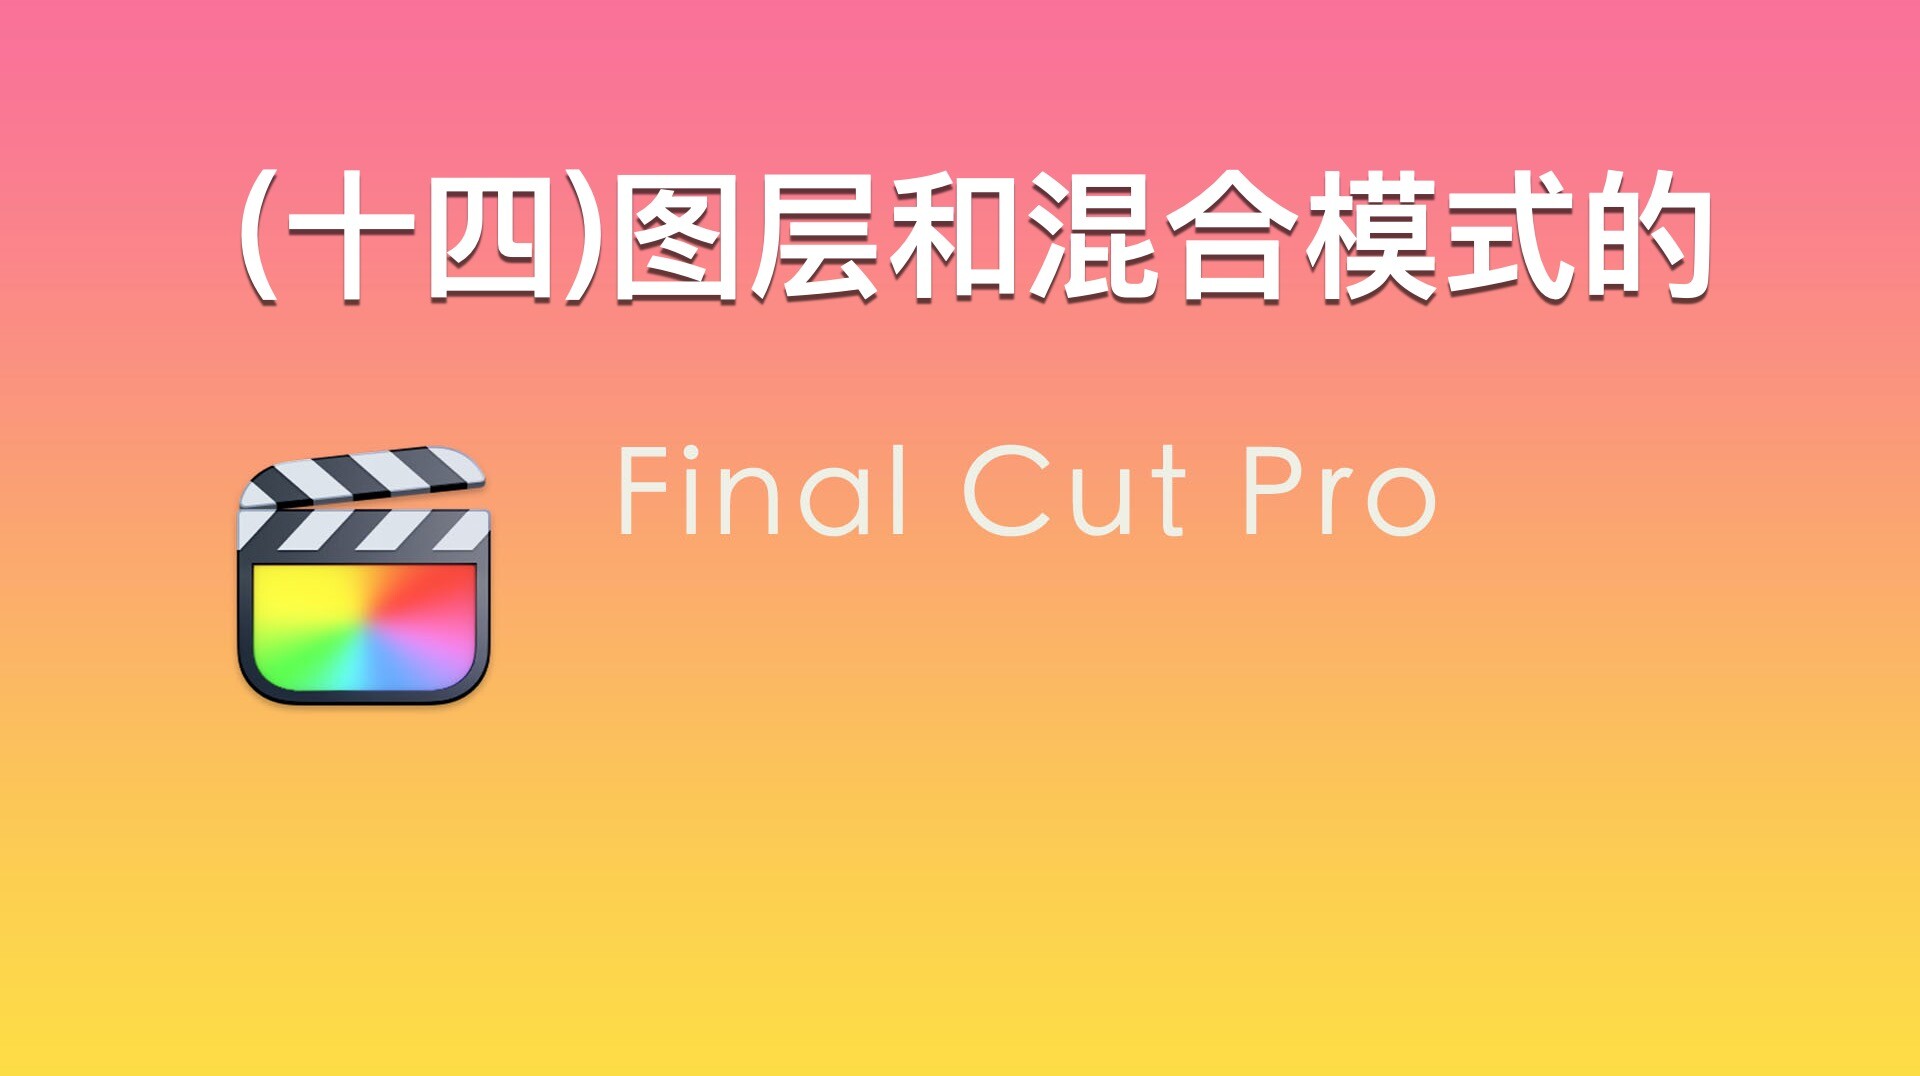 Final Cut Pro中文新手教程(14)图层和混合模式的使用